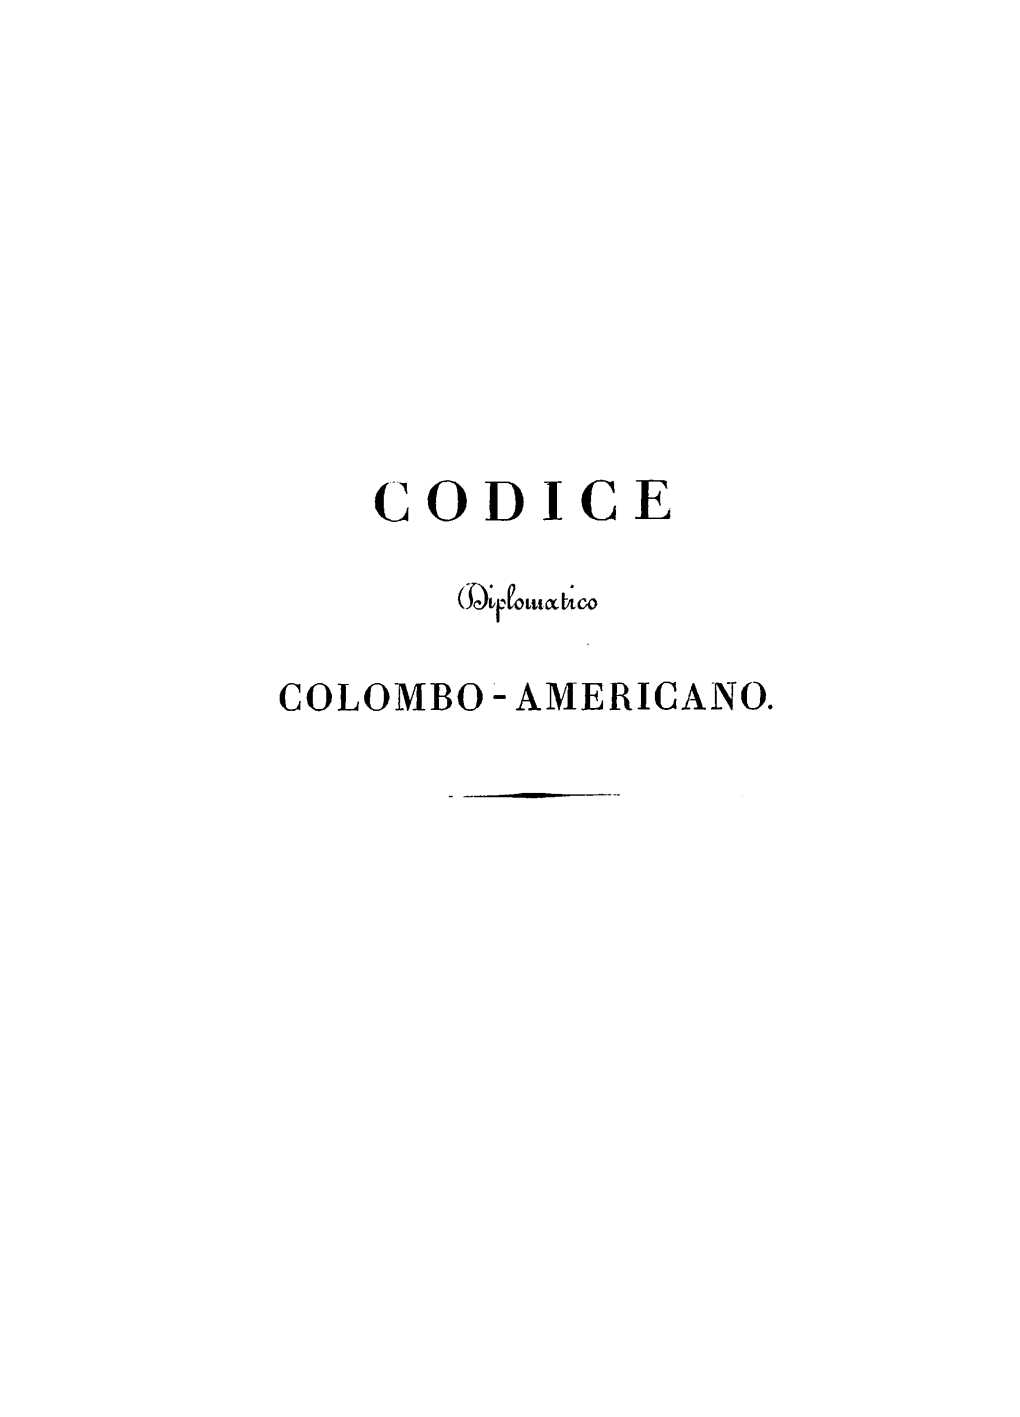 Colombo - Americano